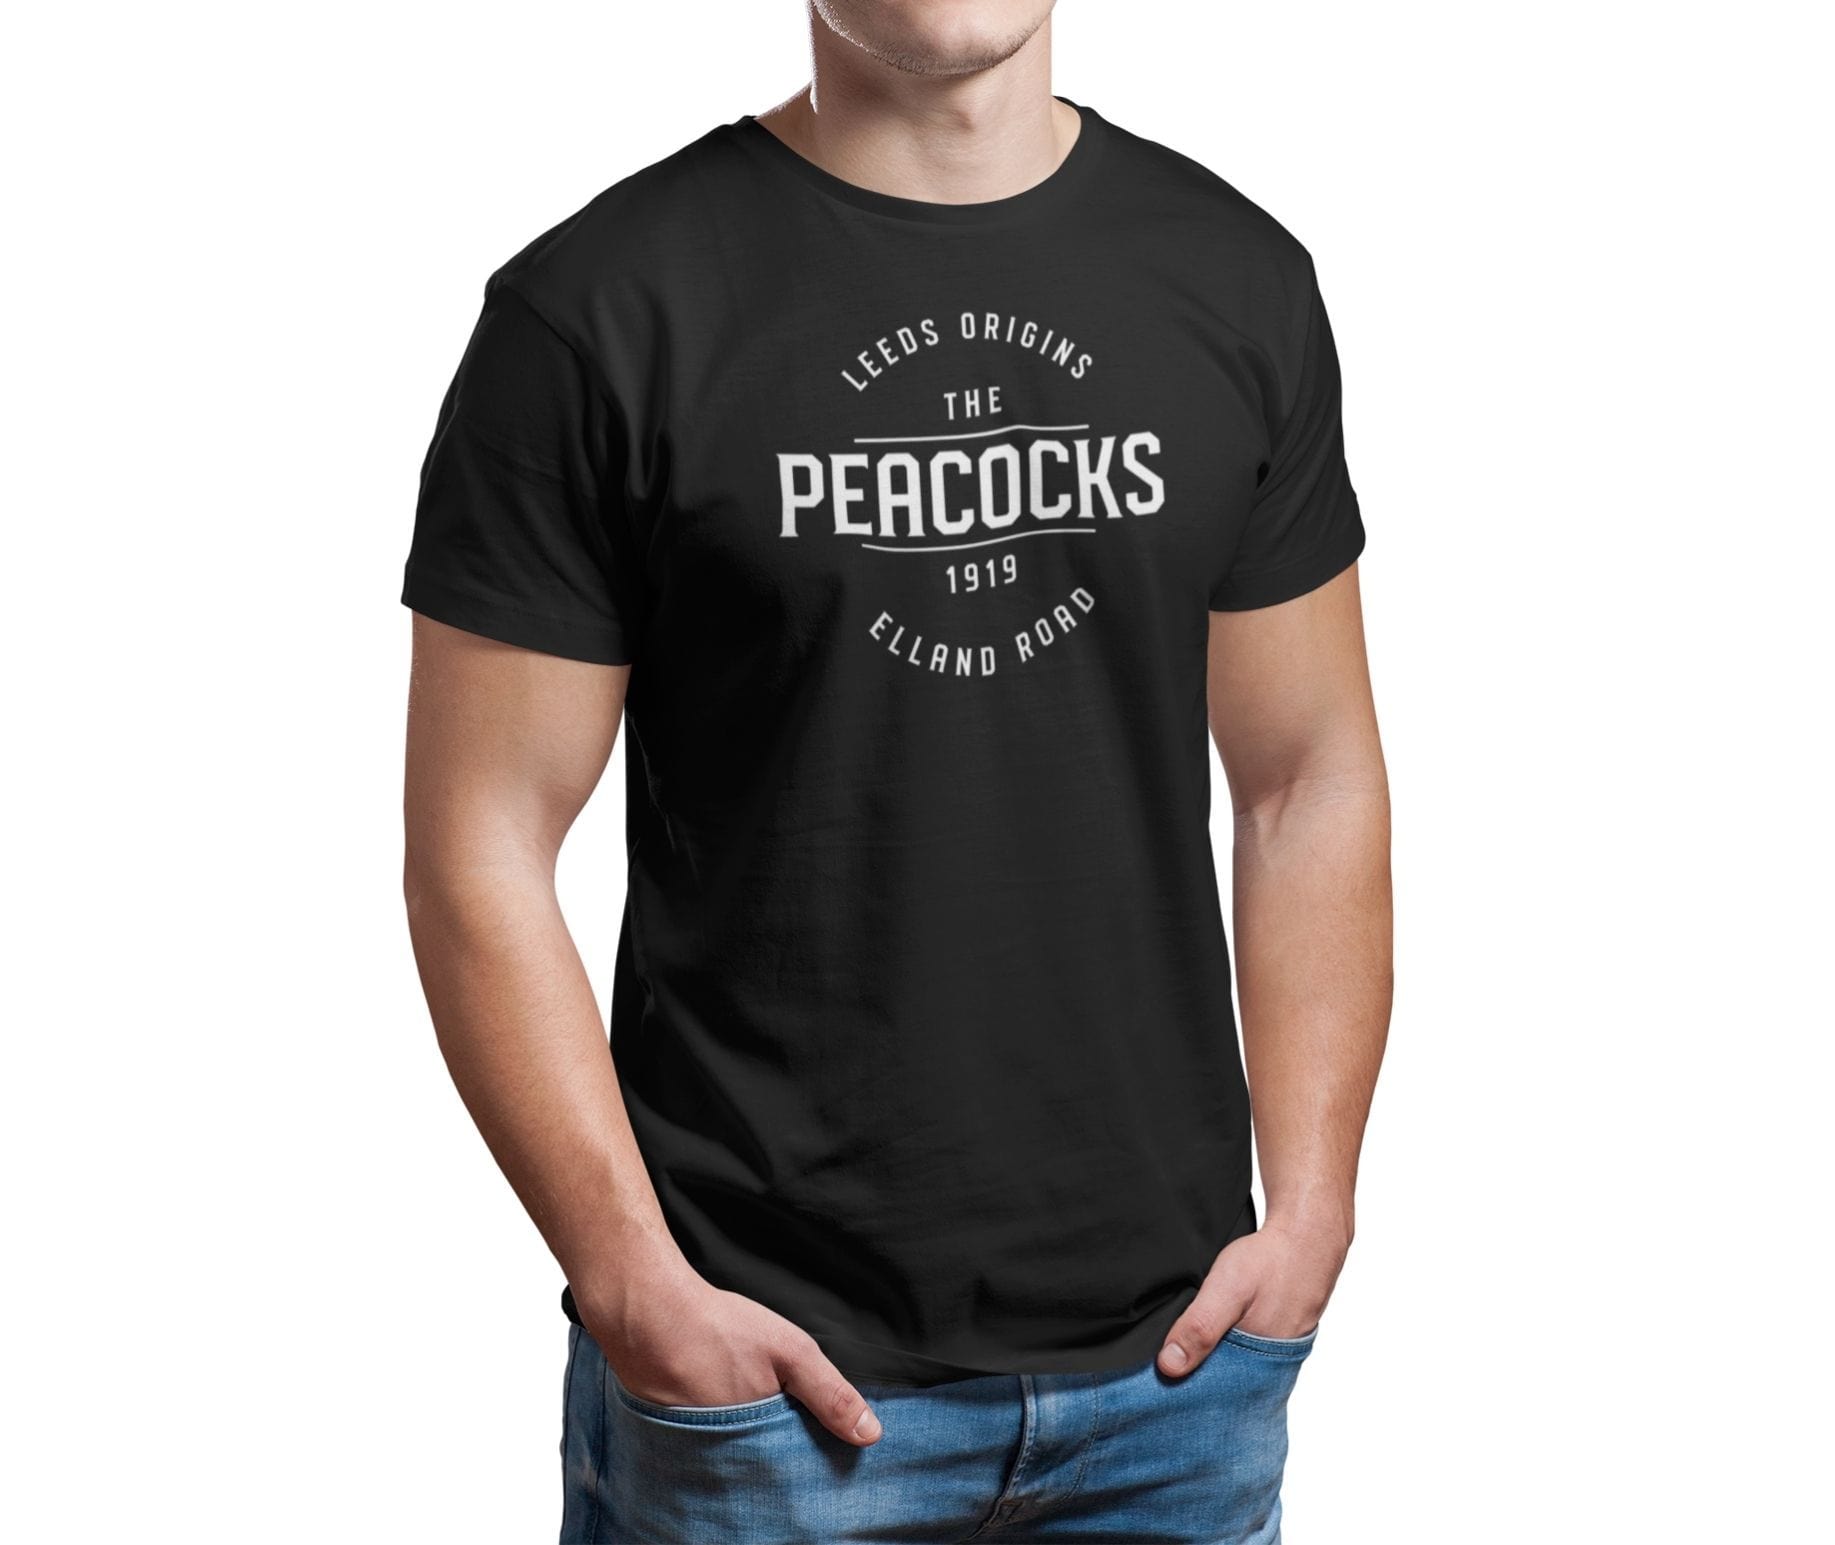 The Peacocks T-Shirt